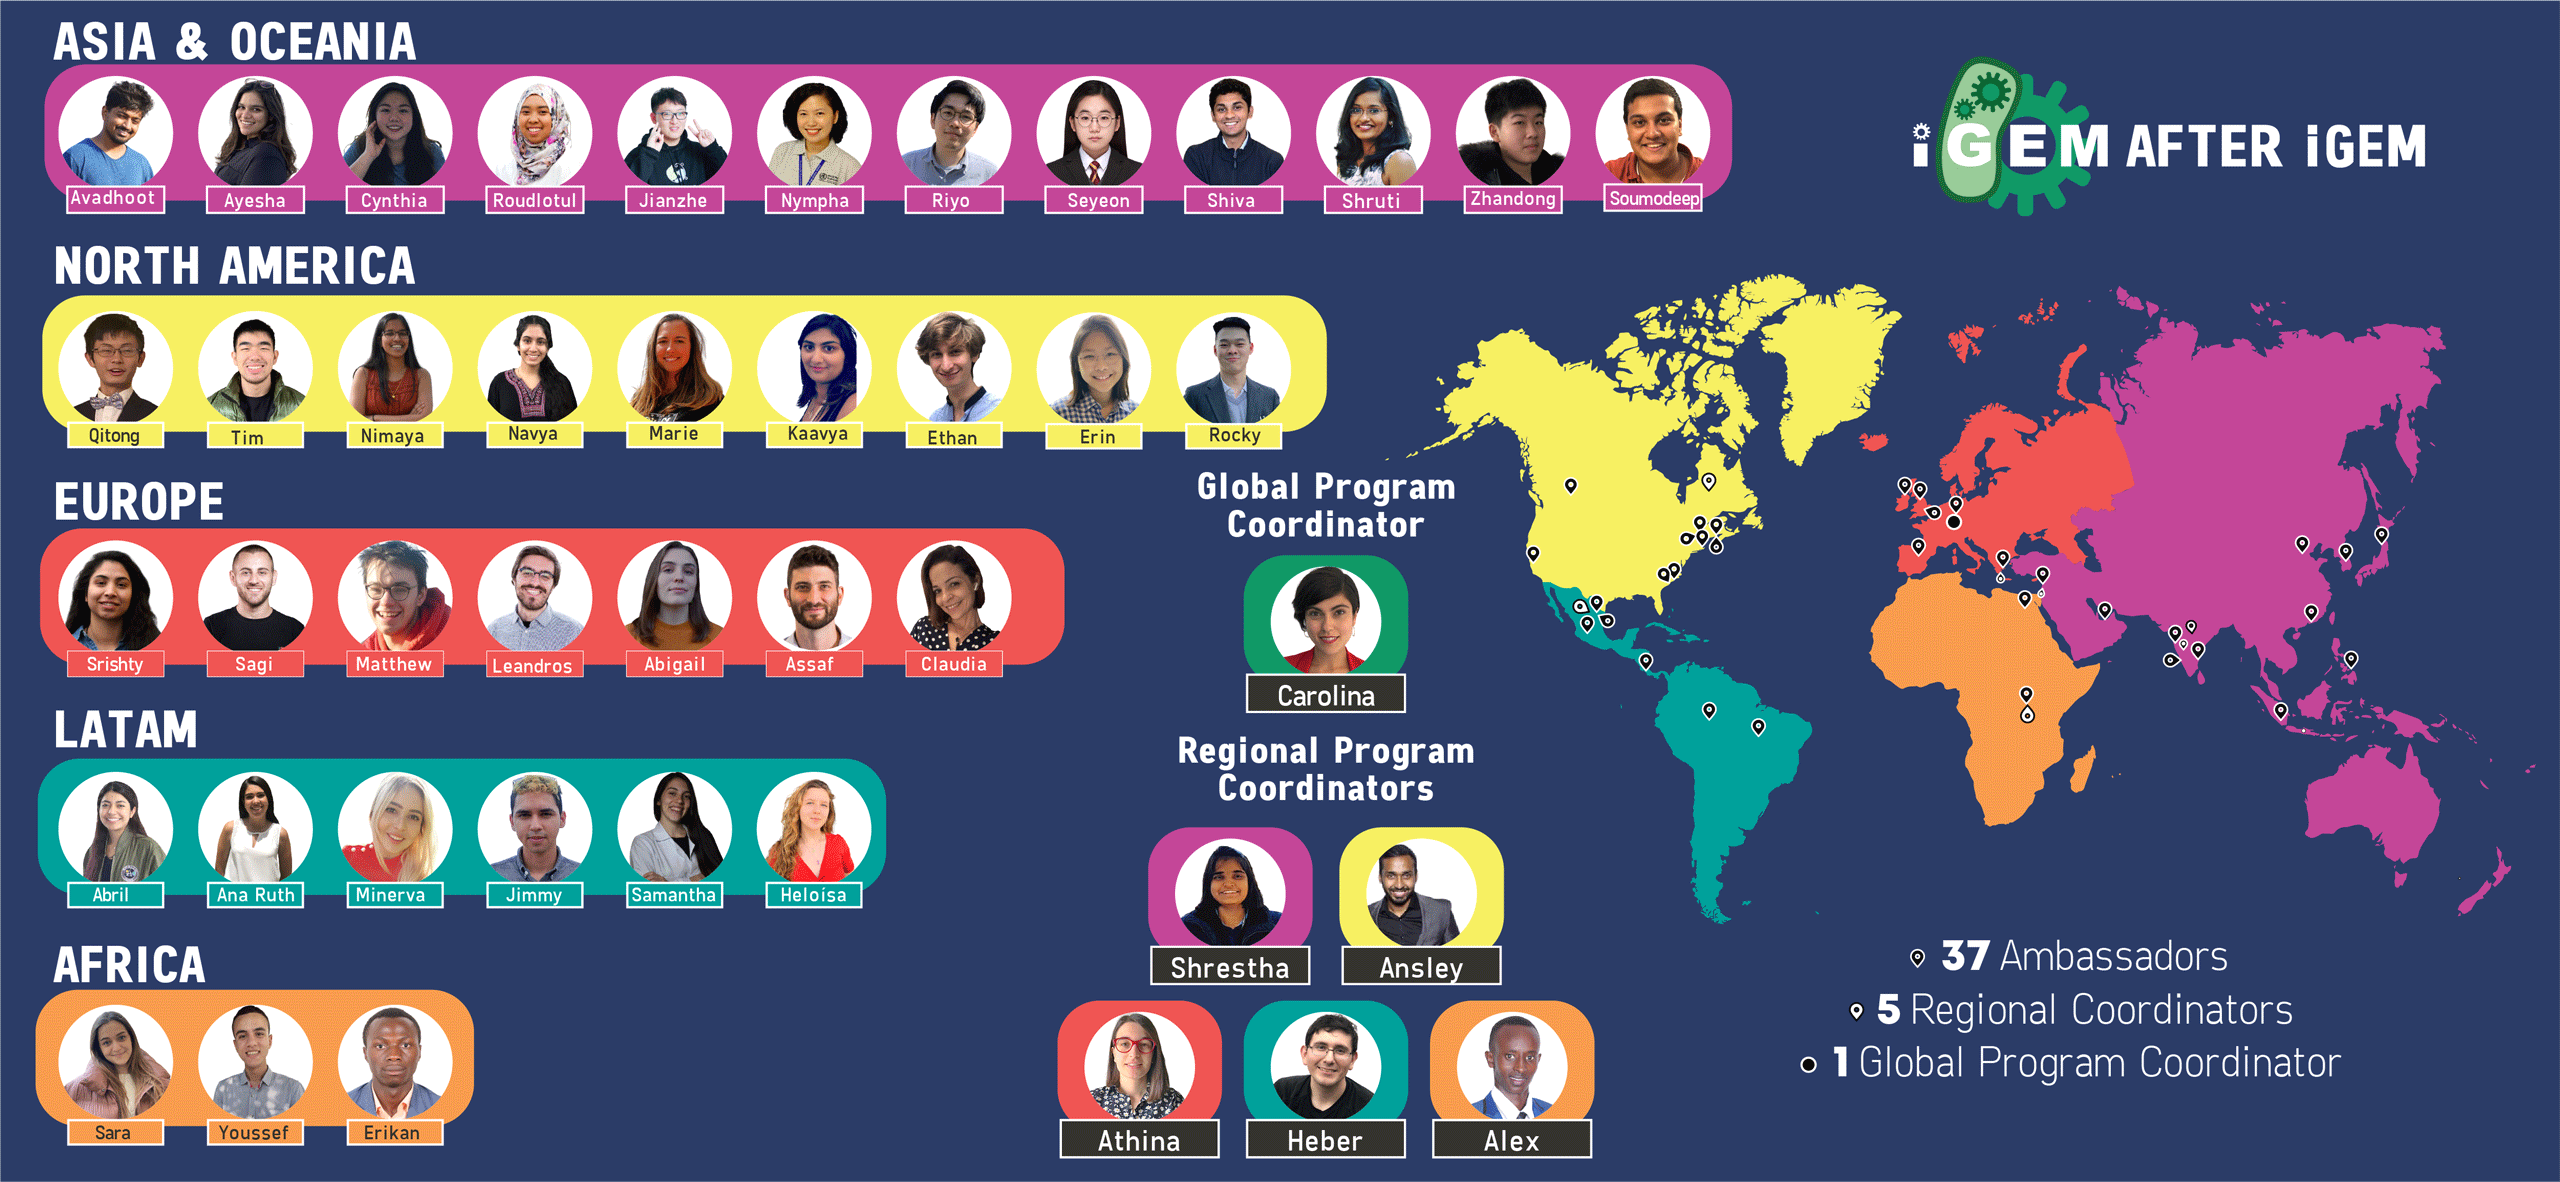 Headshots of the 37 iGEM Ambassadors, 5 Regional Coordinators, and the Global Program Coordinator